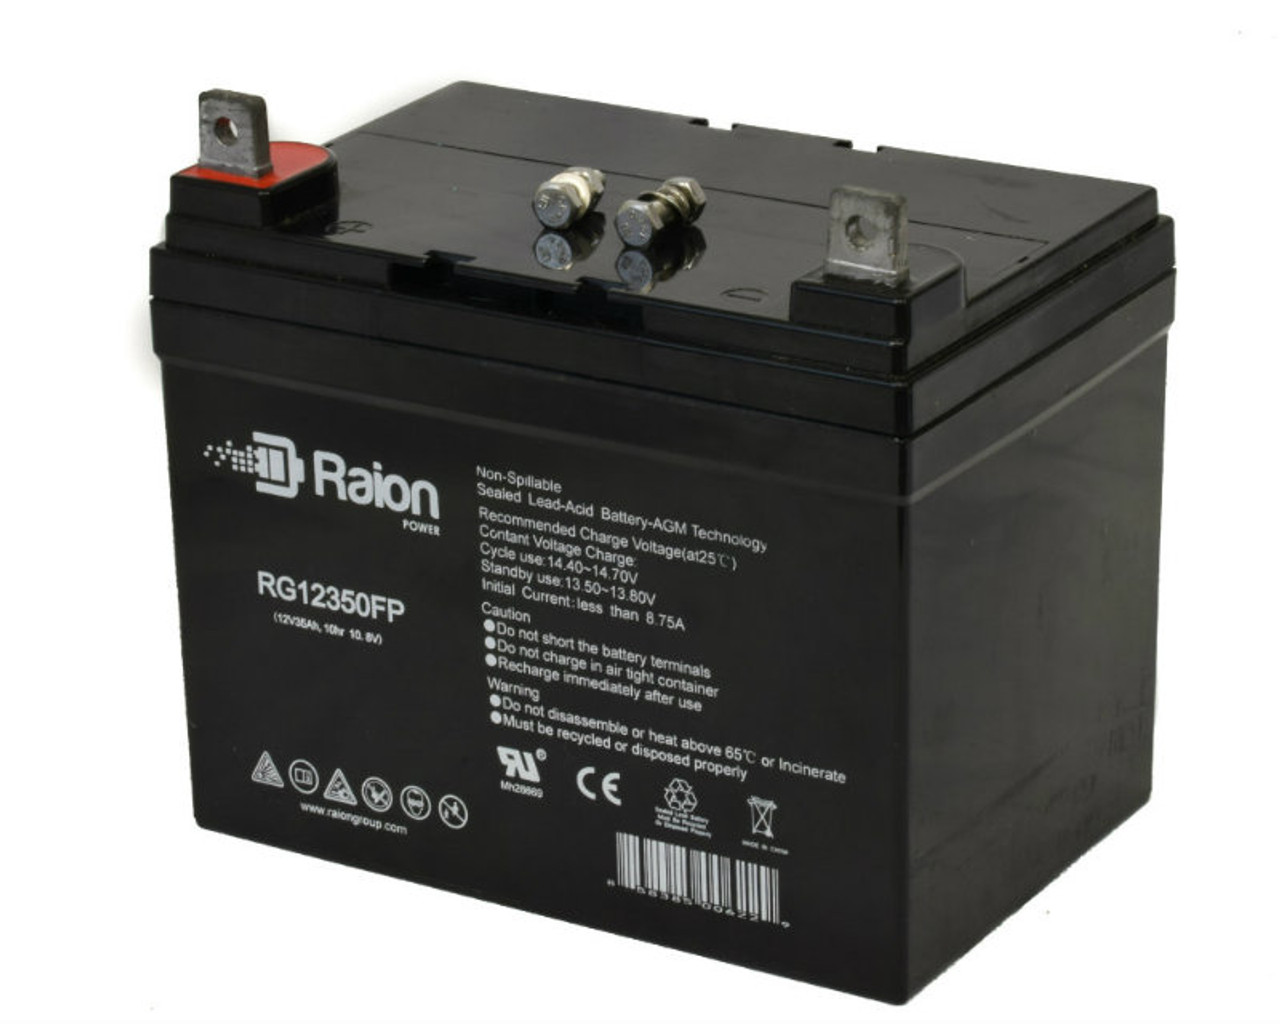 Raion Power 12V 35Ah Replacement UPS Battery Cartridge for Alpha Technologies EBP 24C (032-039-XX)